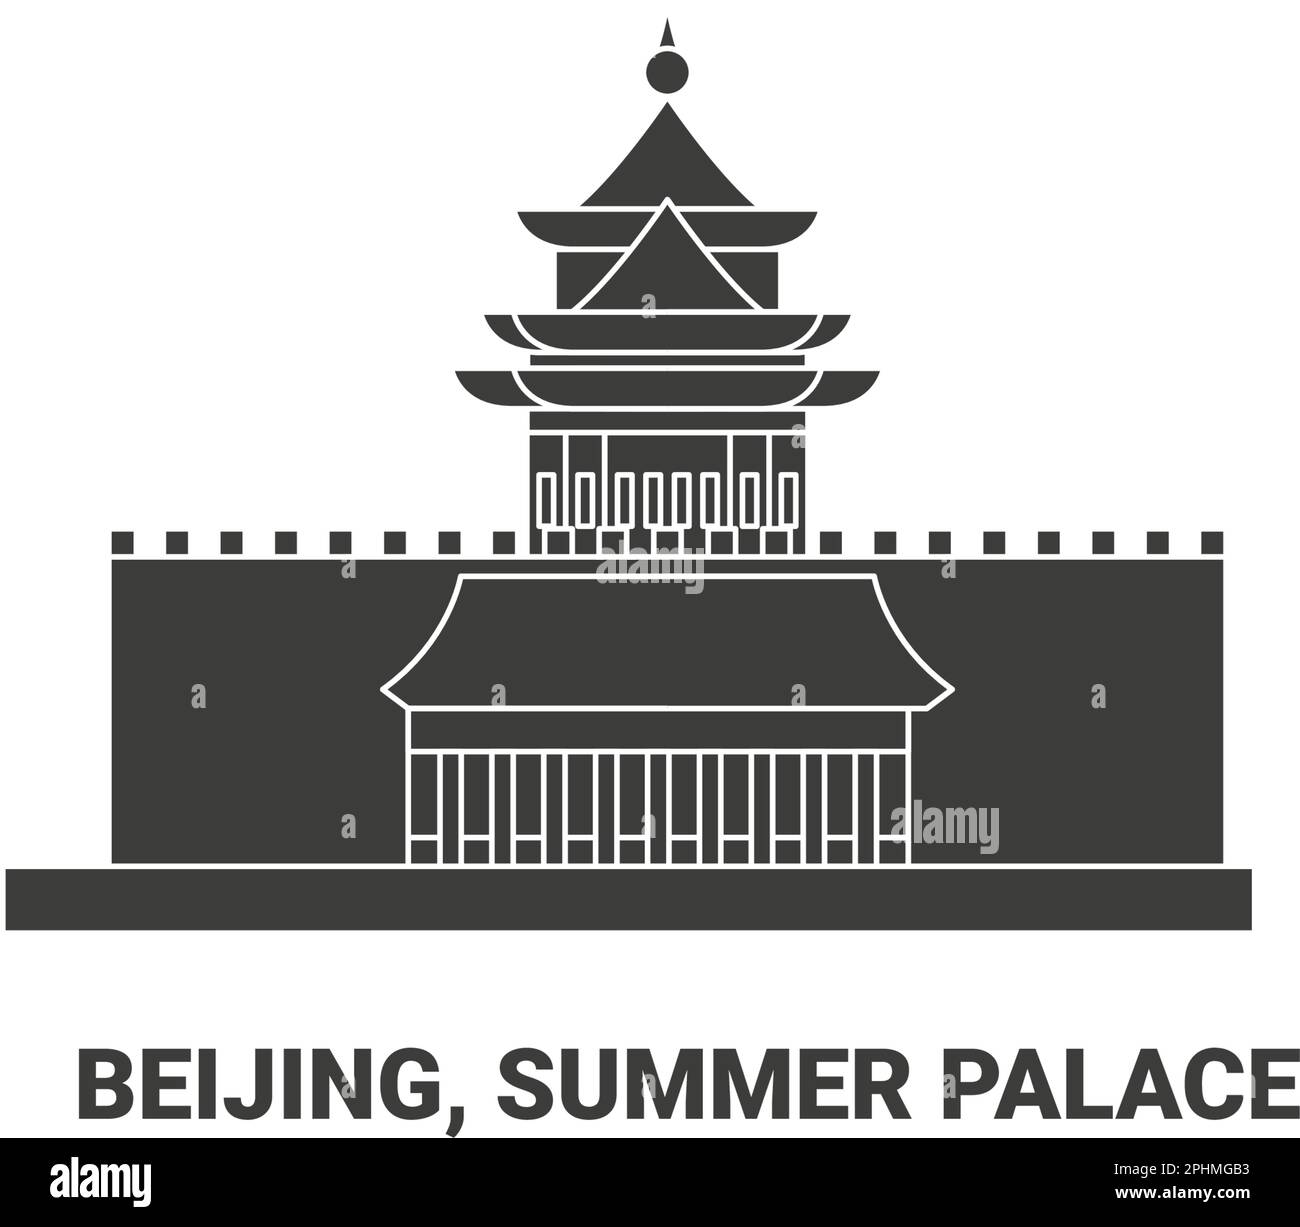 China, Beijing, Summer Palace, travel landmark vector illustration Stock Vector